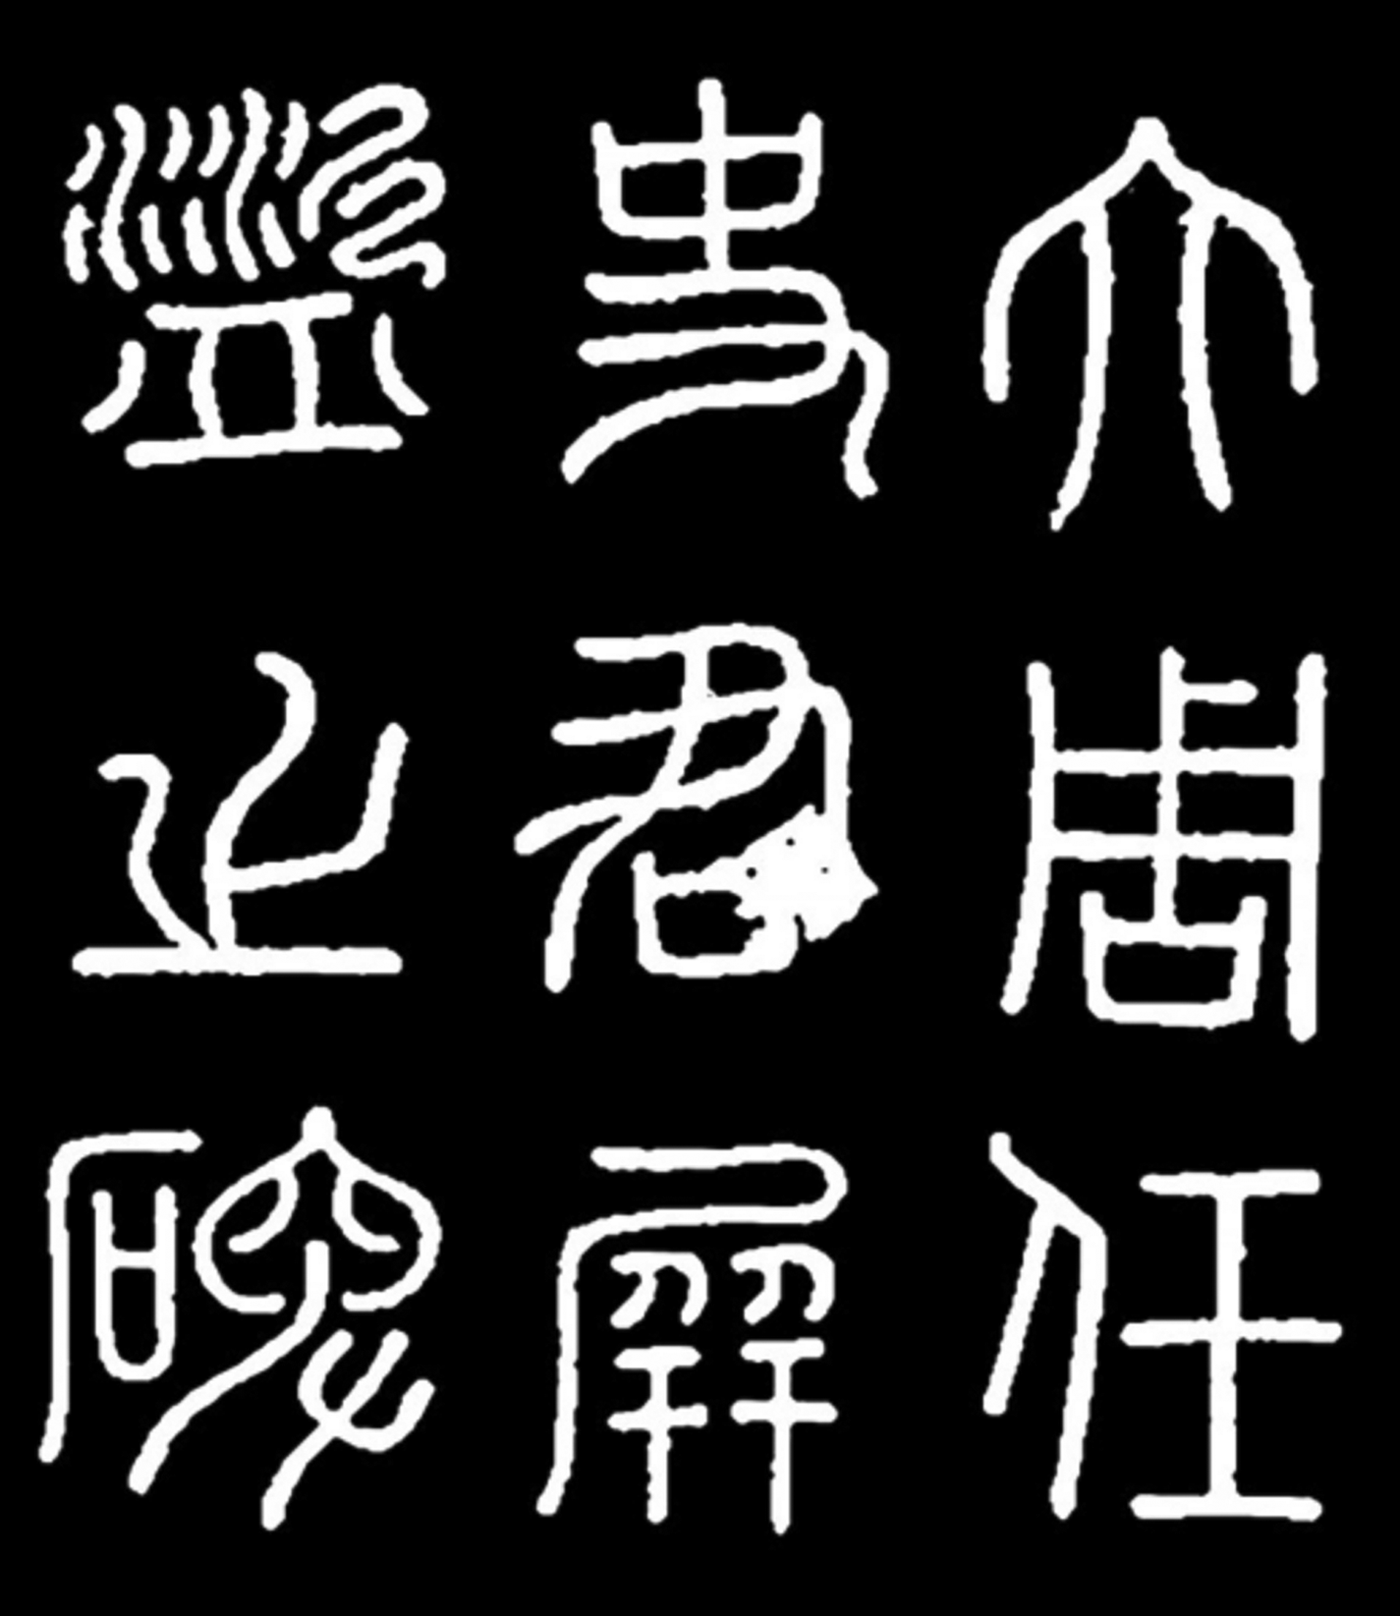 Guo Zhongshu S Archaeology Of Writing Journal Of Chinese History 中國歷史學刊 Cambridge Core